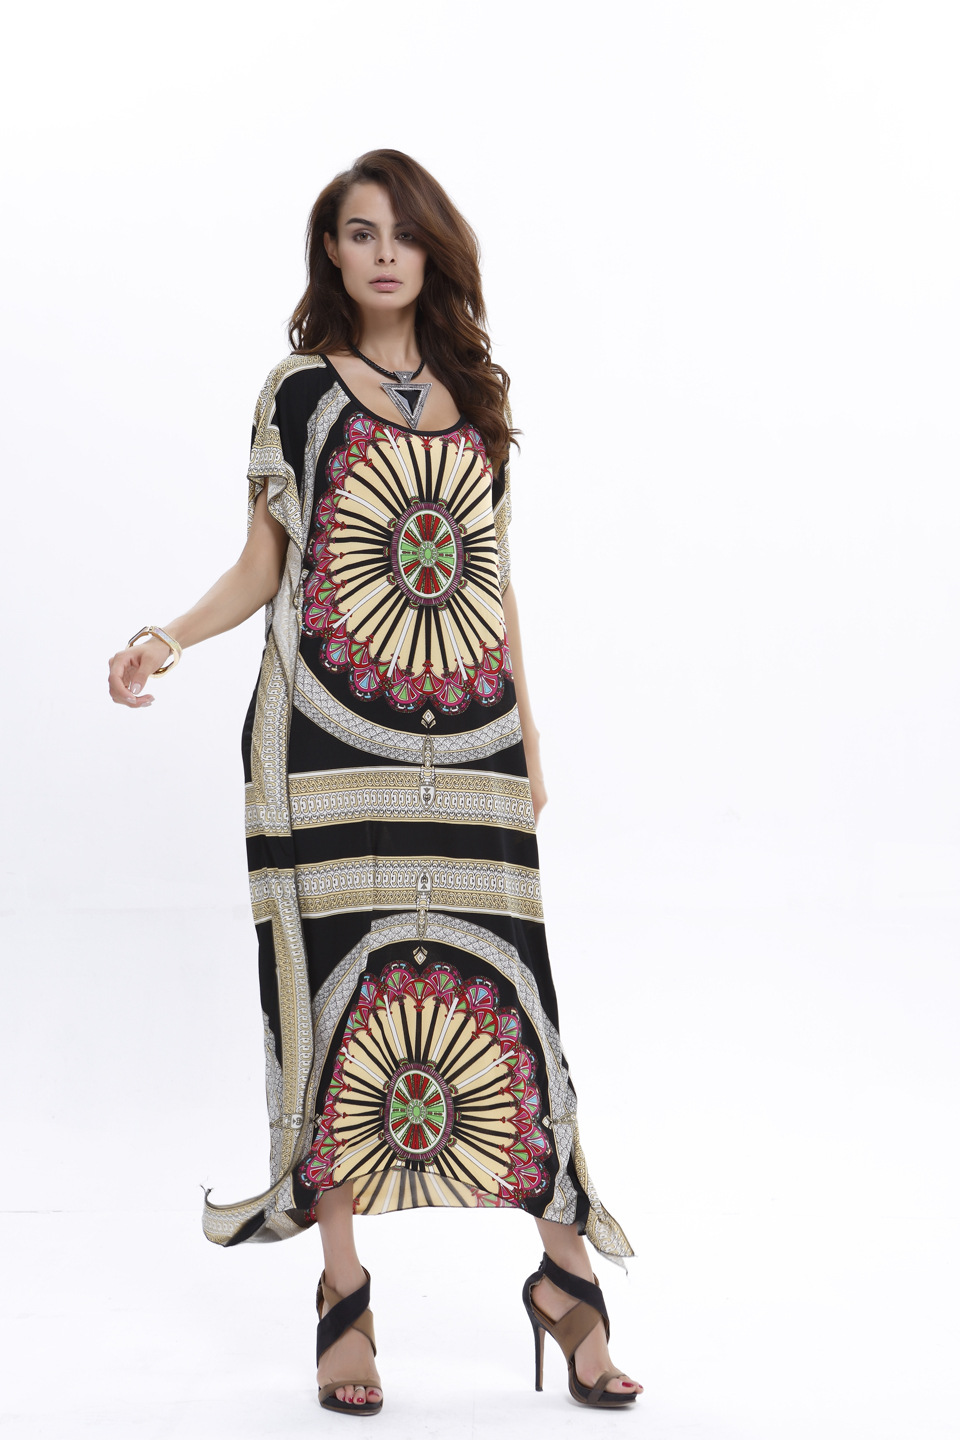 SHOWERSMILE-Brand-National-Dress-Indian-Women-Loose-Tribal-Print-Maxi-Dress-Batwing-Sleeve-Irregular-32660610703